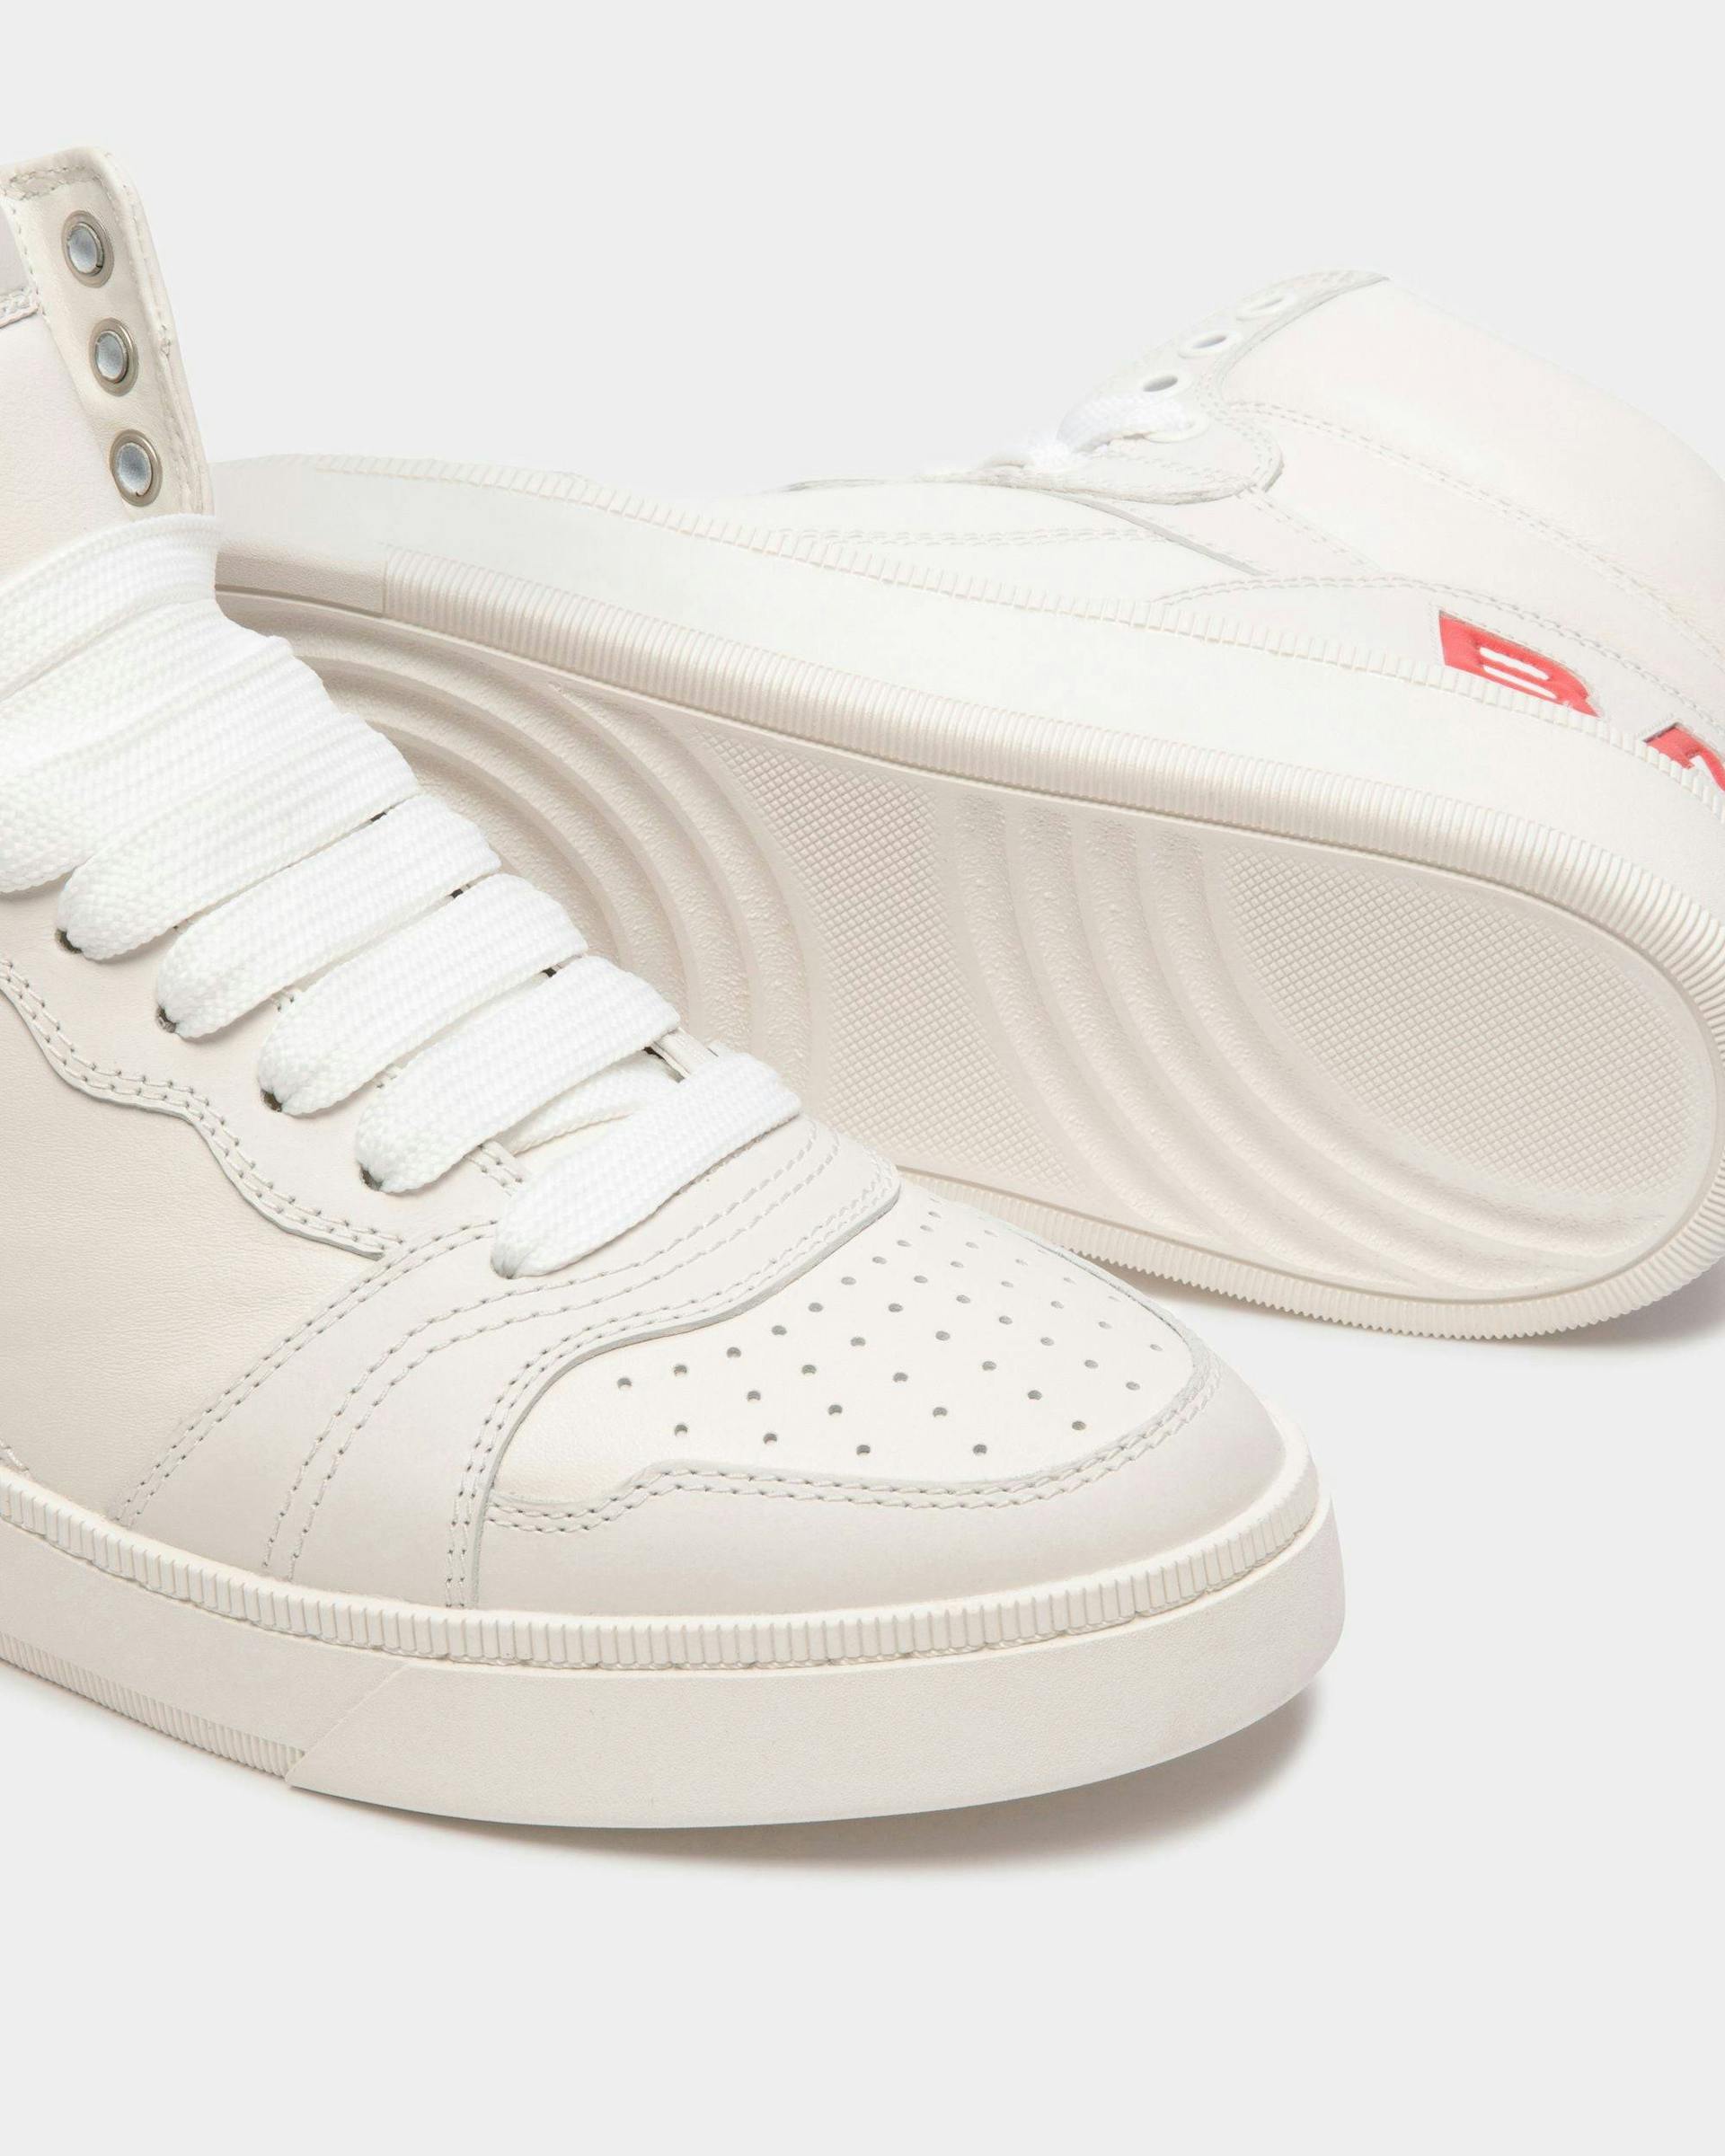 Men's Raise High-Top Sneaker in White Leather | Bally | Still Life Below